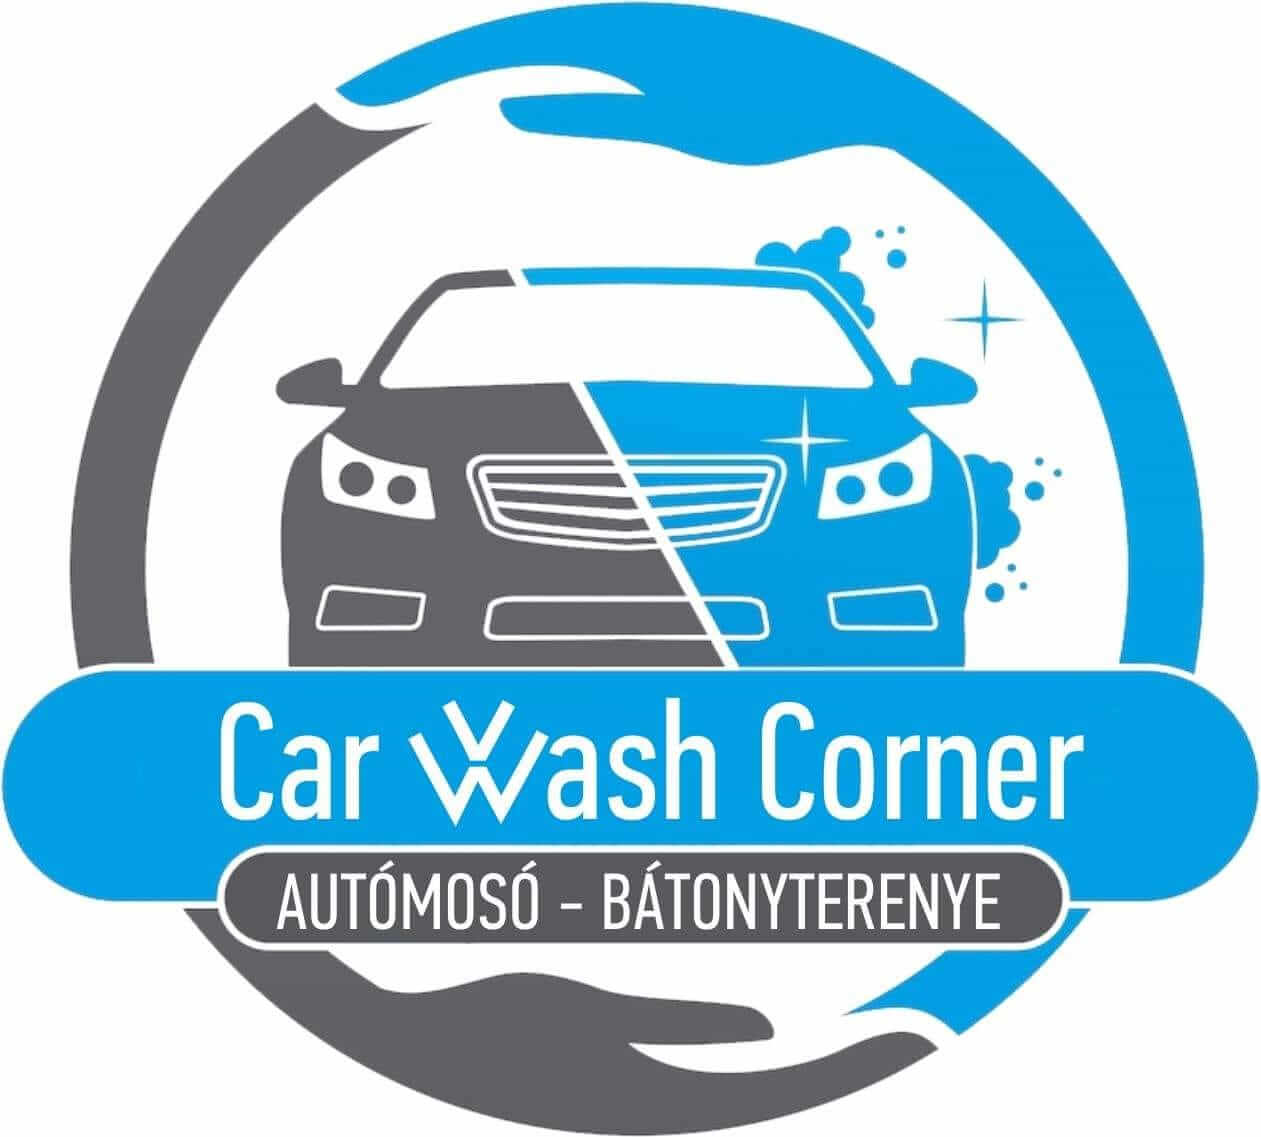 Car wash corner